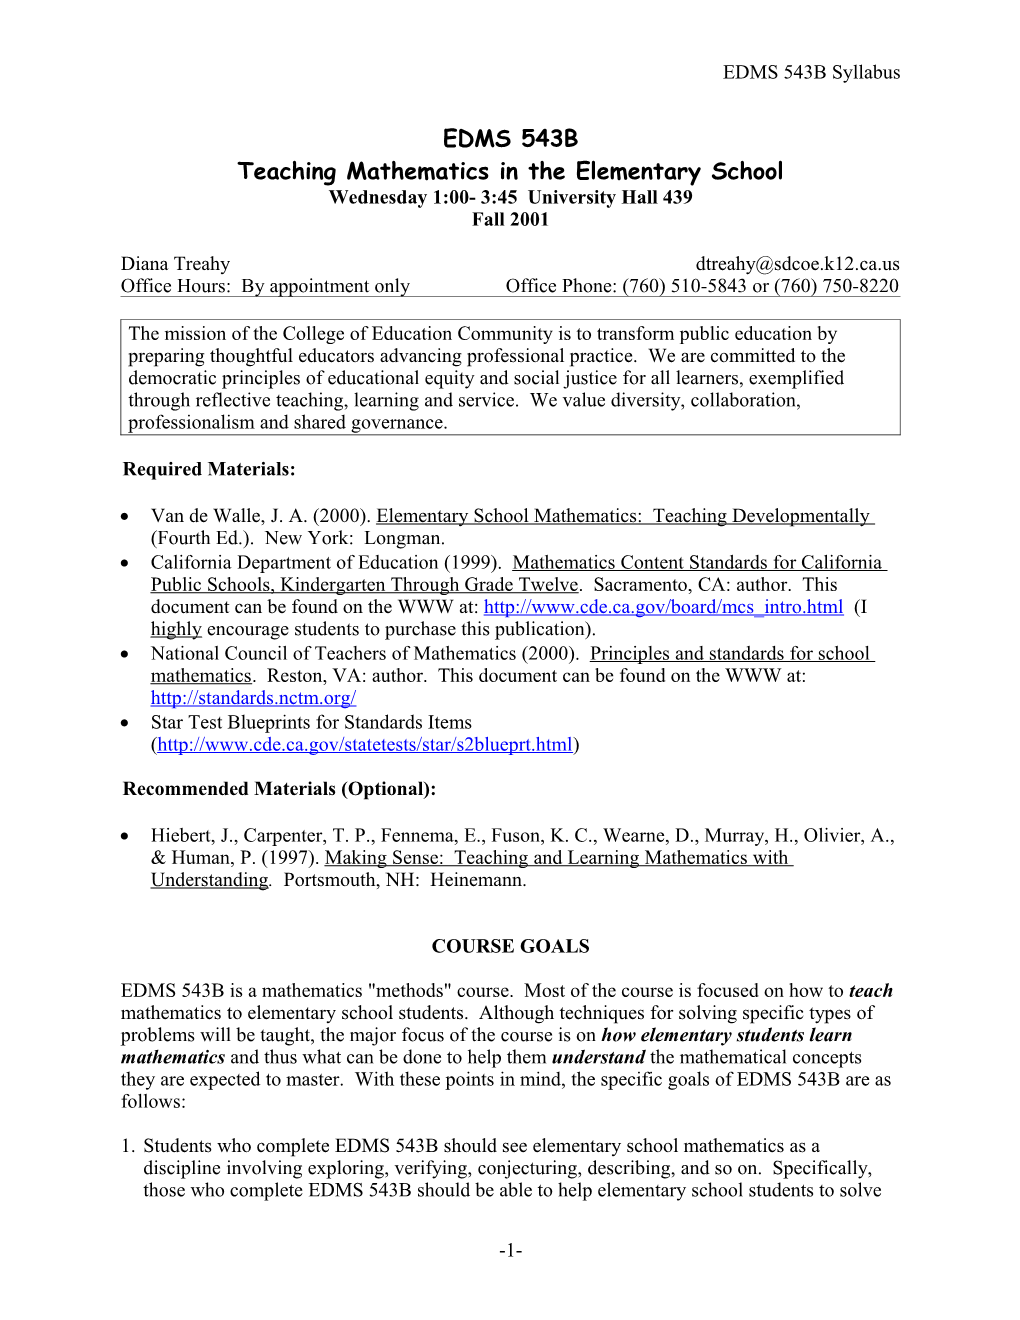 E343: Teaching Mathematics in the Elementary School